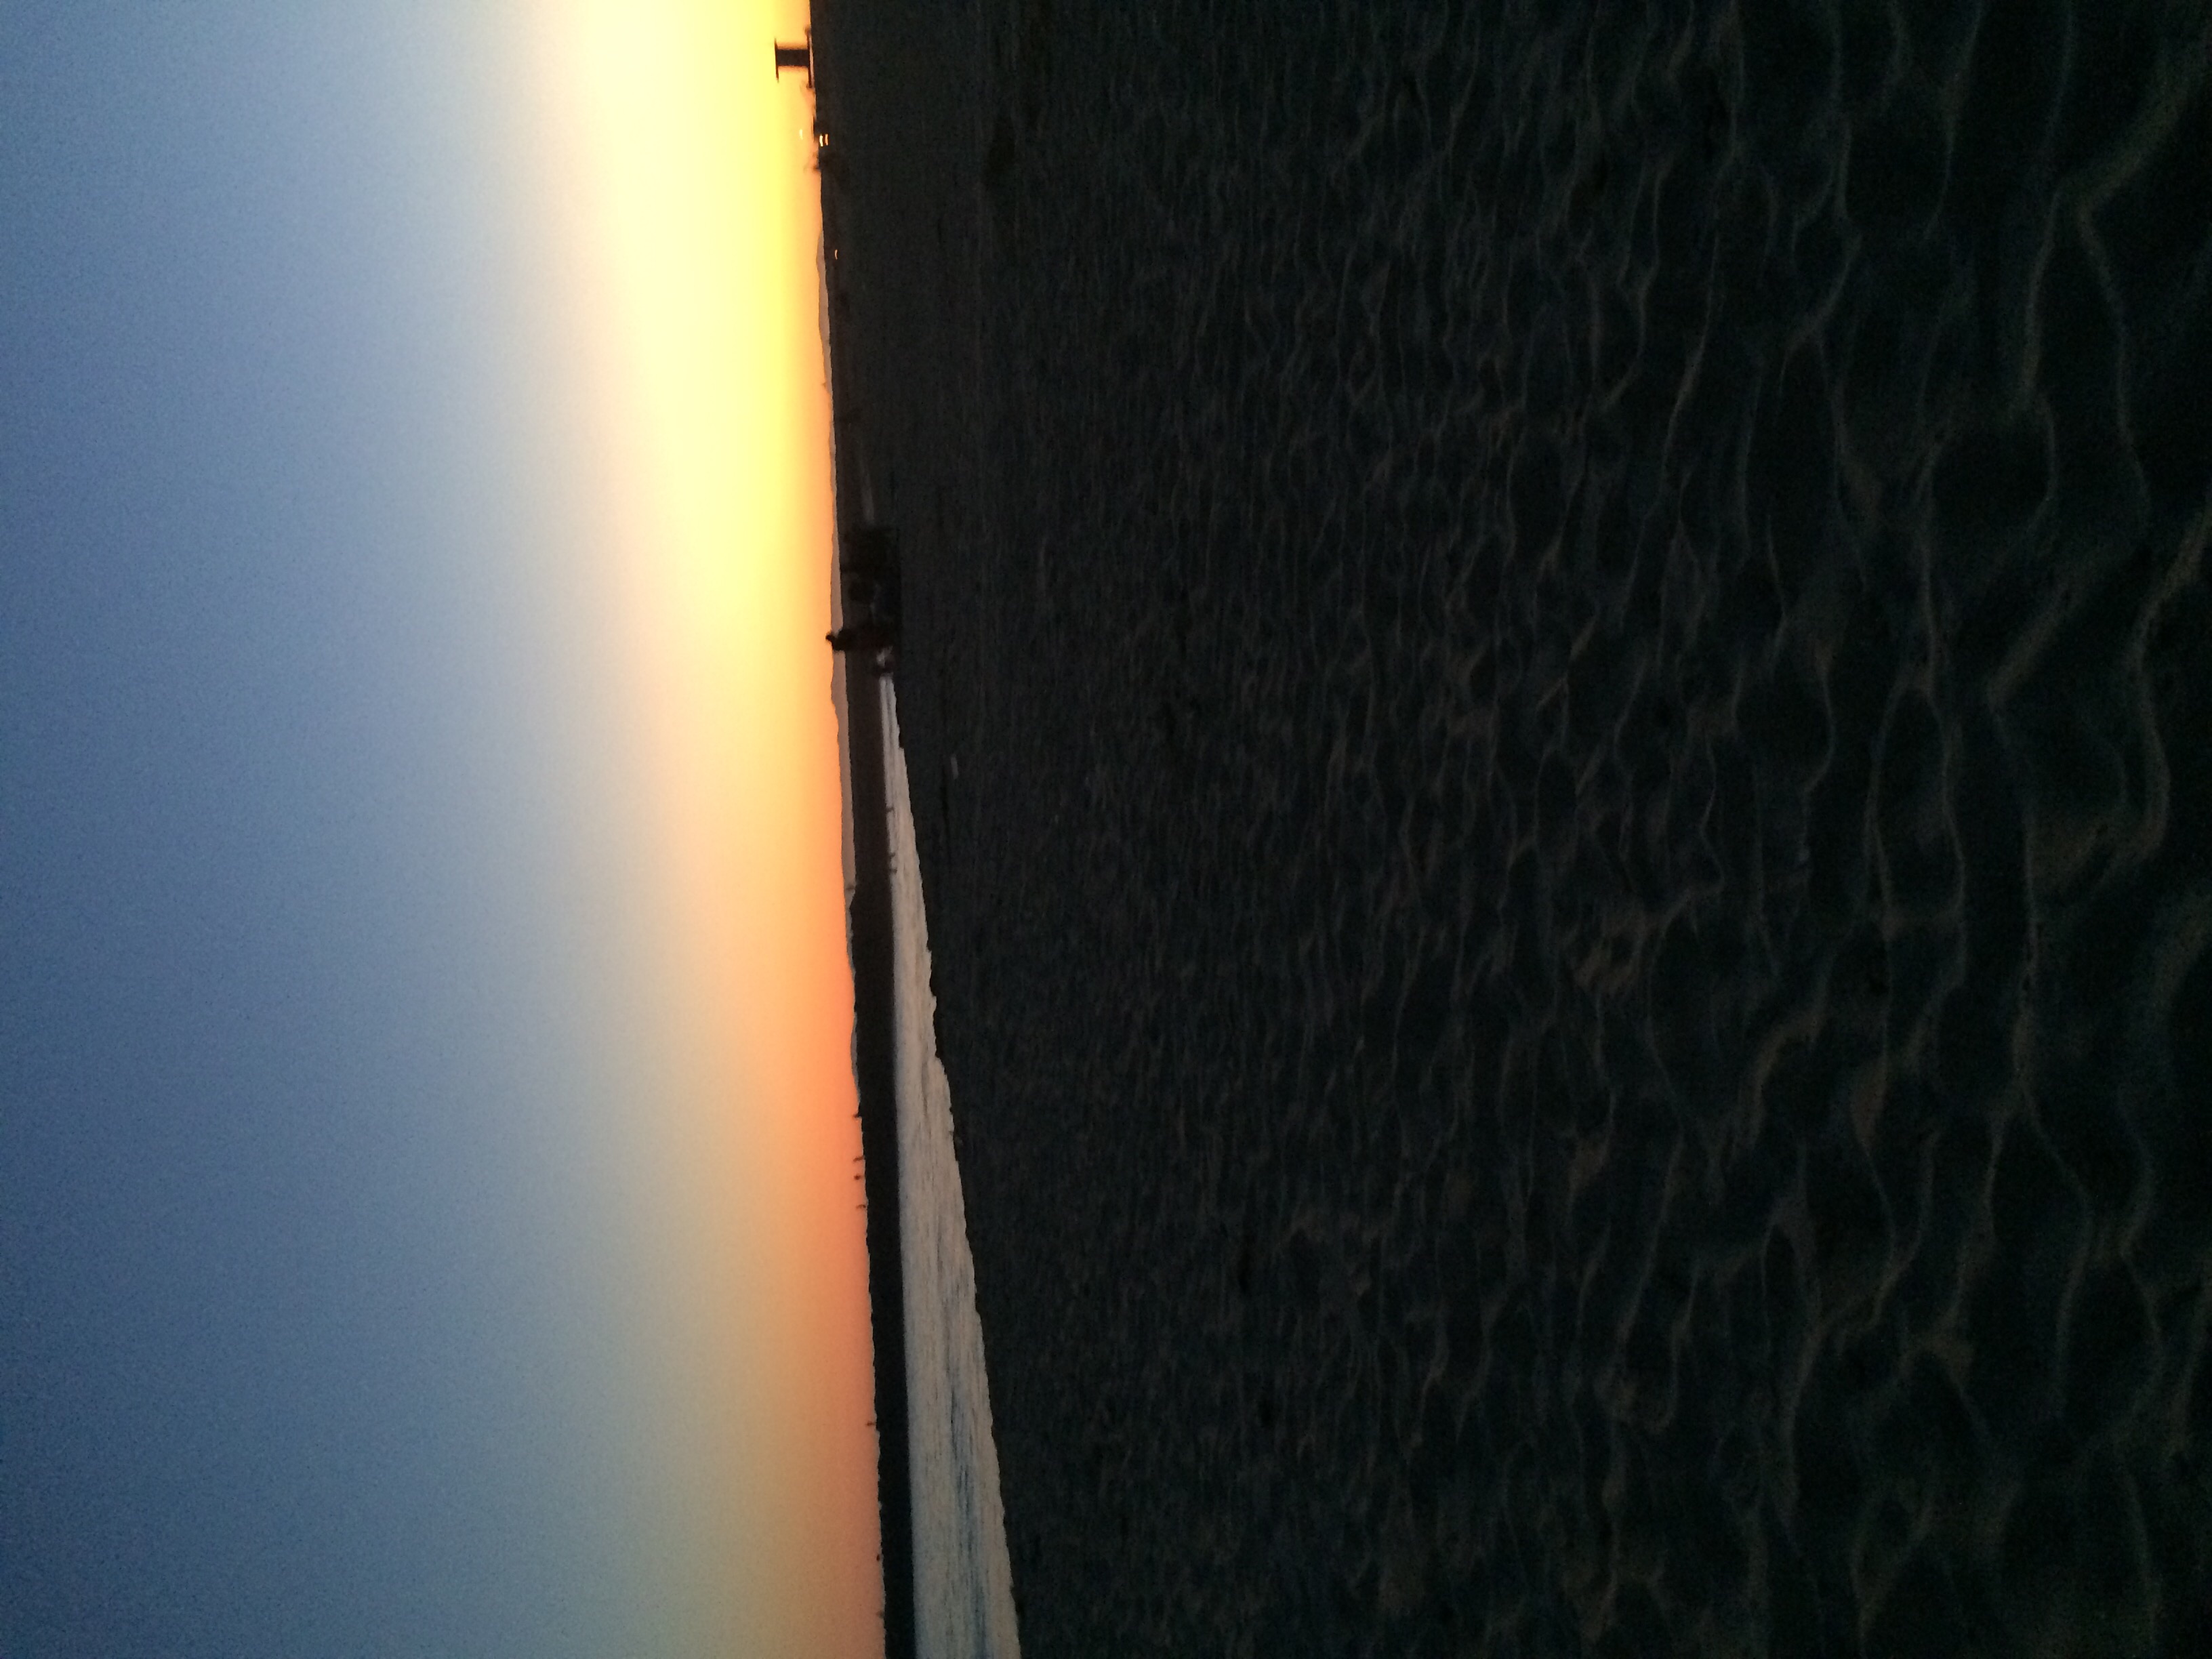  Sunset de praia, praia